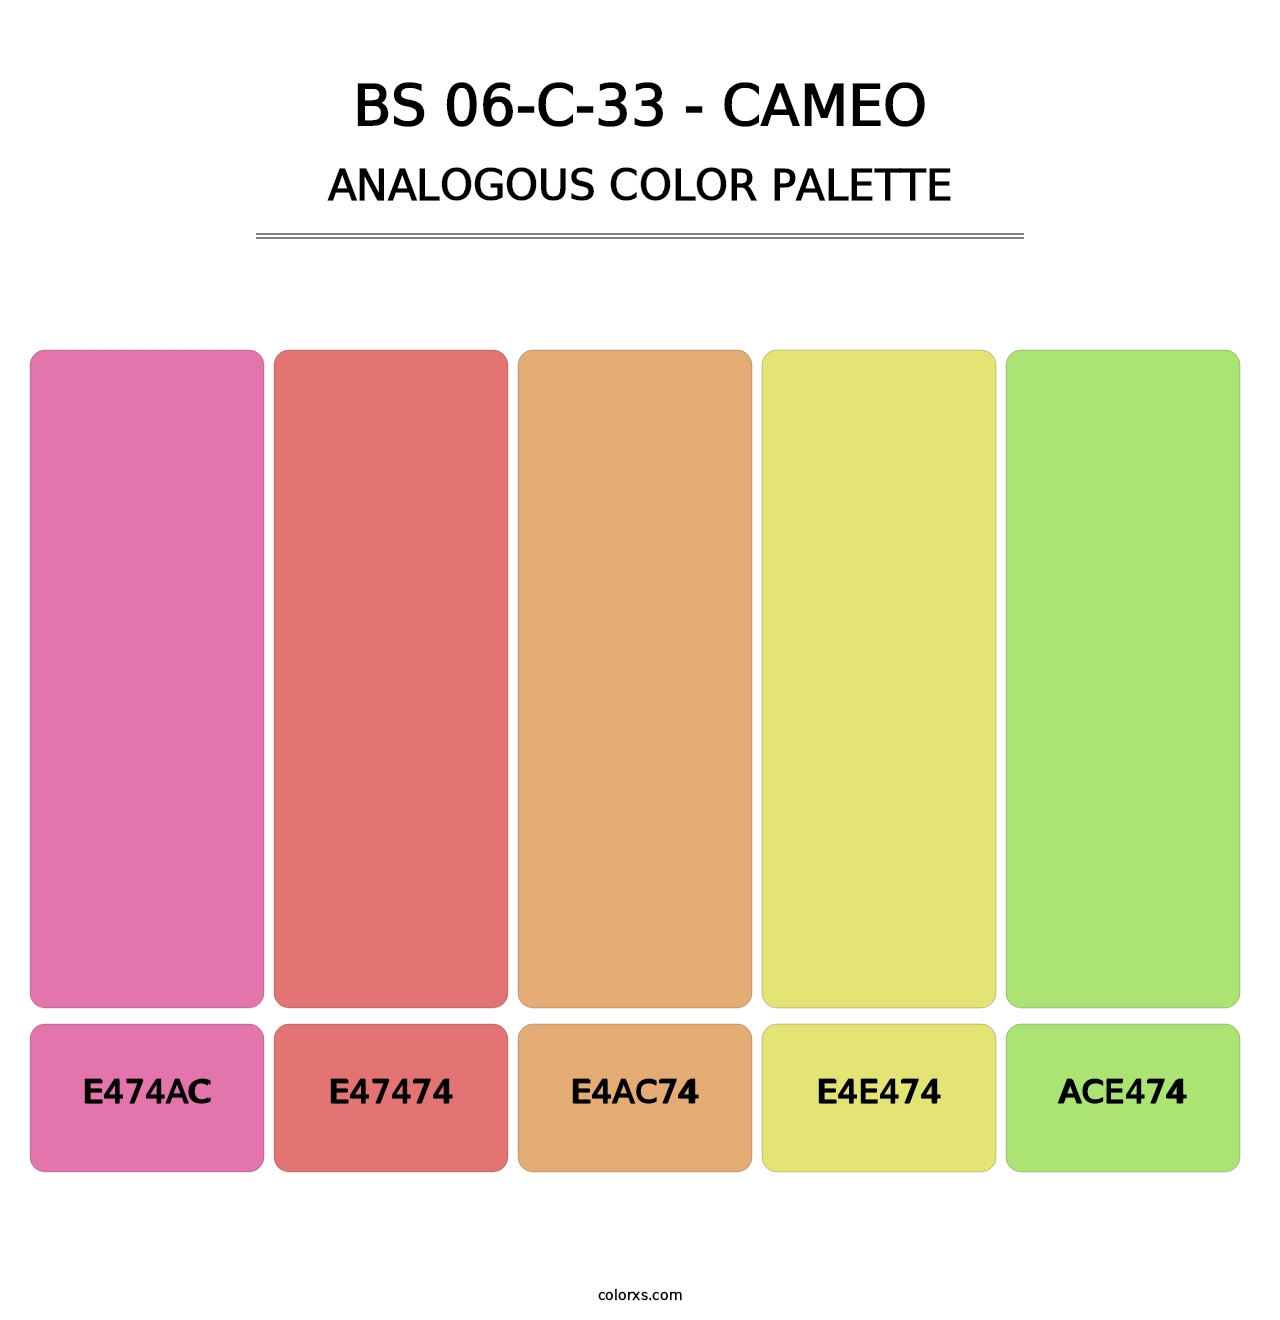 BS 06-C-33 - Cameo - Analogous Color Palette